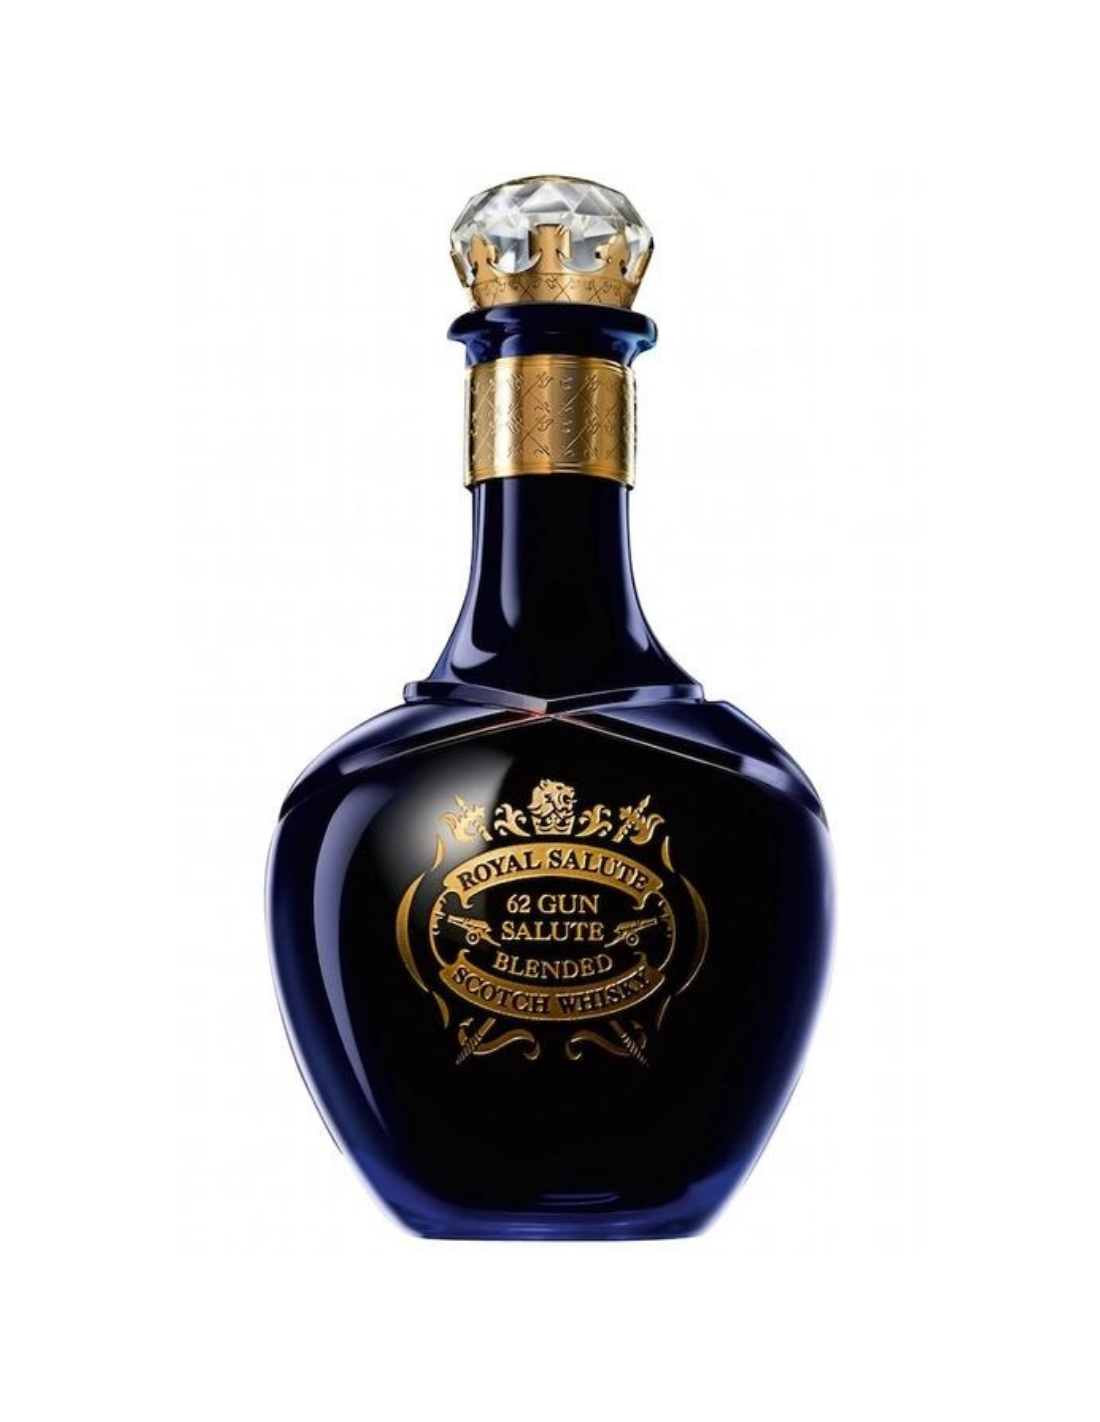 Whisky Chivas Regal Royal Salute 62 Gun Blended Scotch, 0.7L, 43% alc., Marea Britanie alcooldiscount.ro